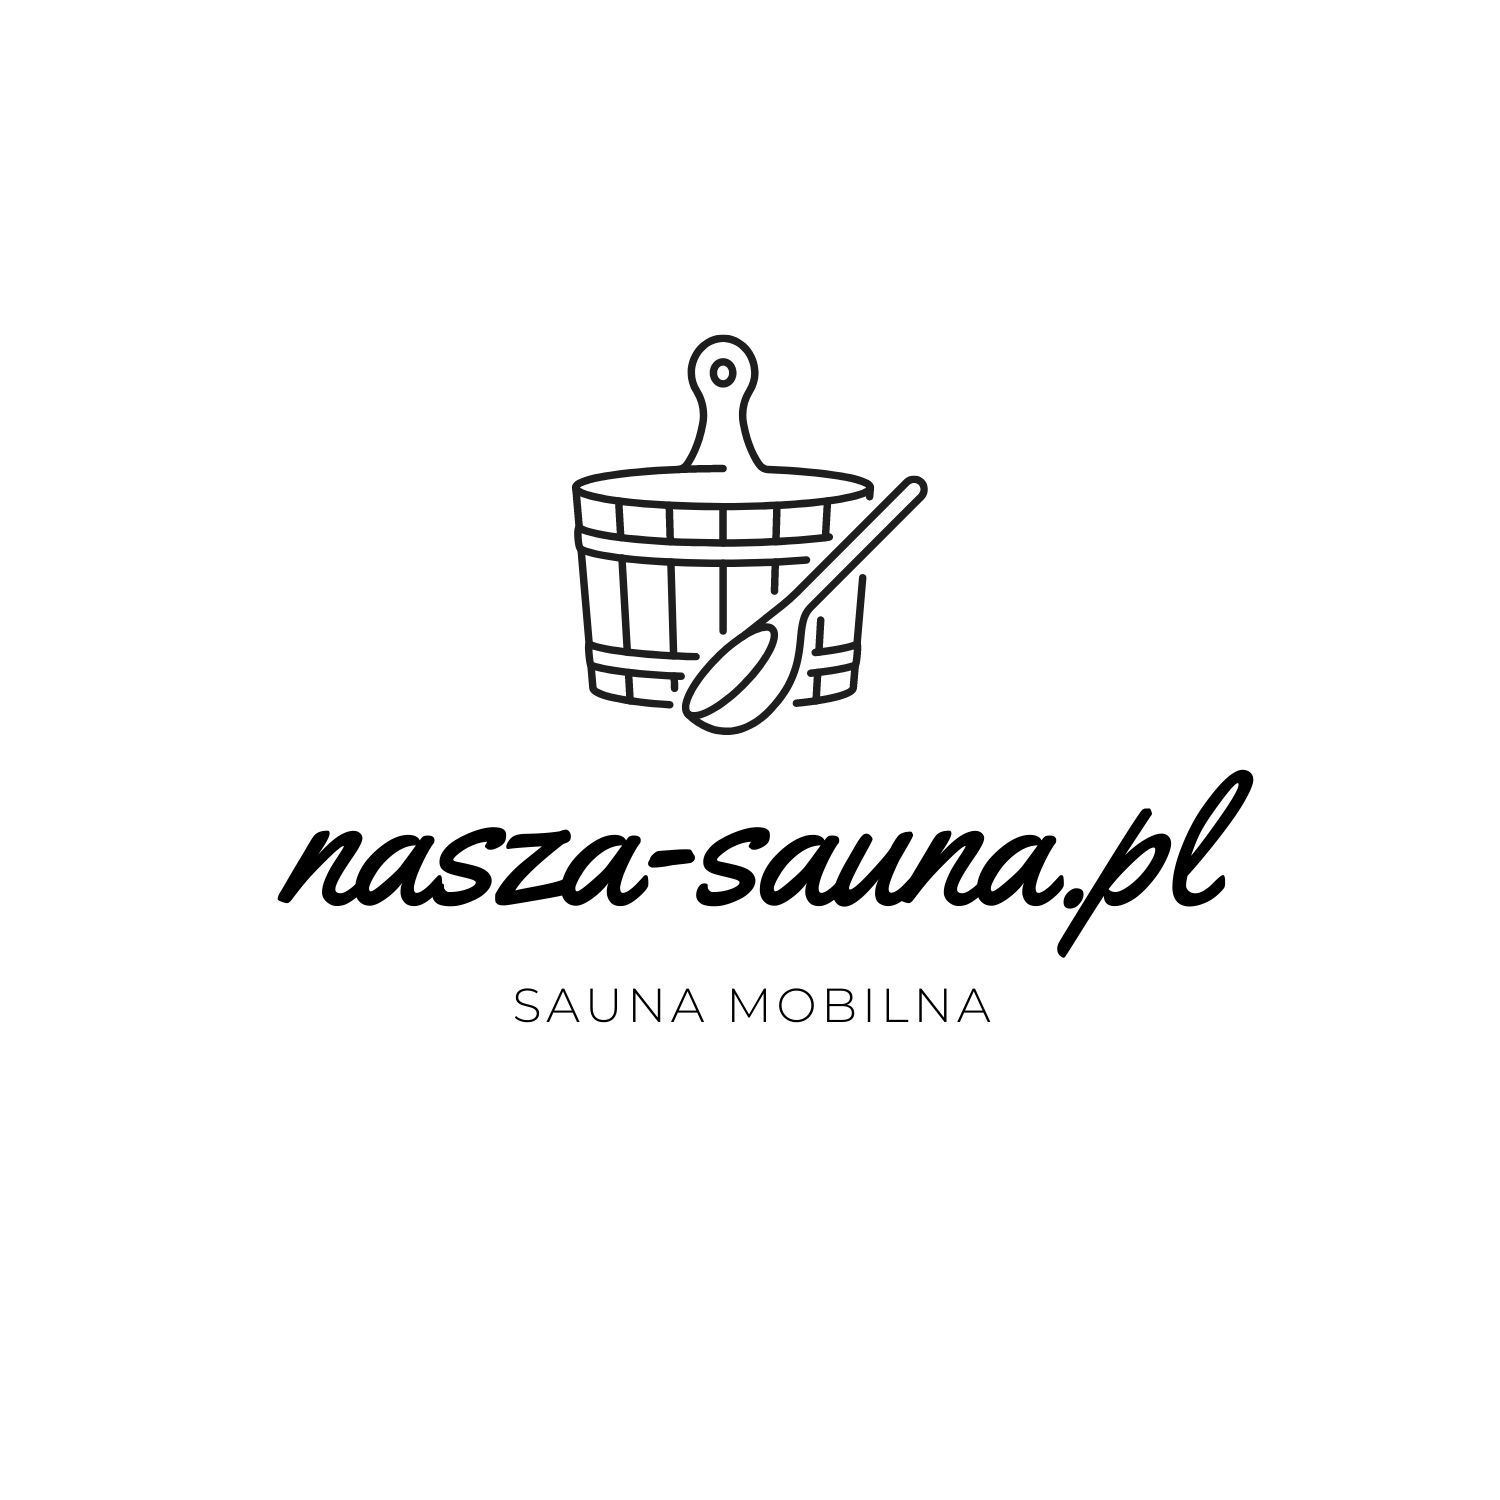 Logo - nasza-sauna.pl